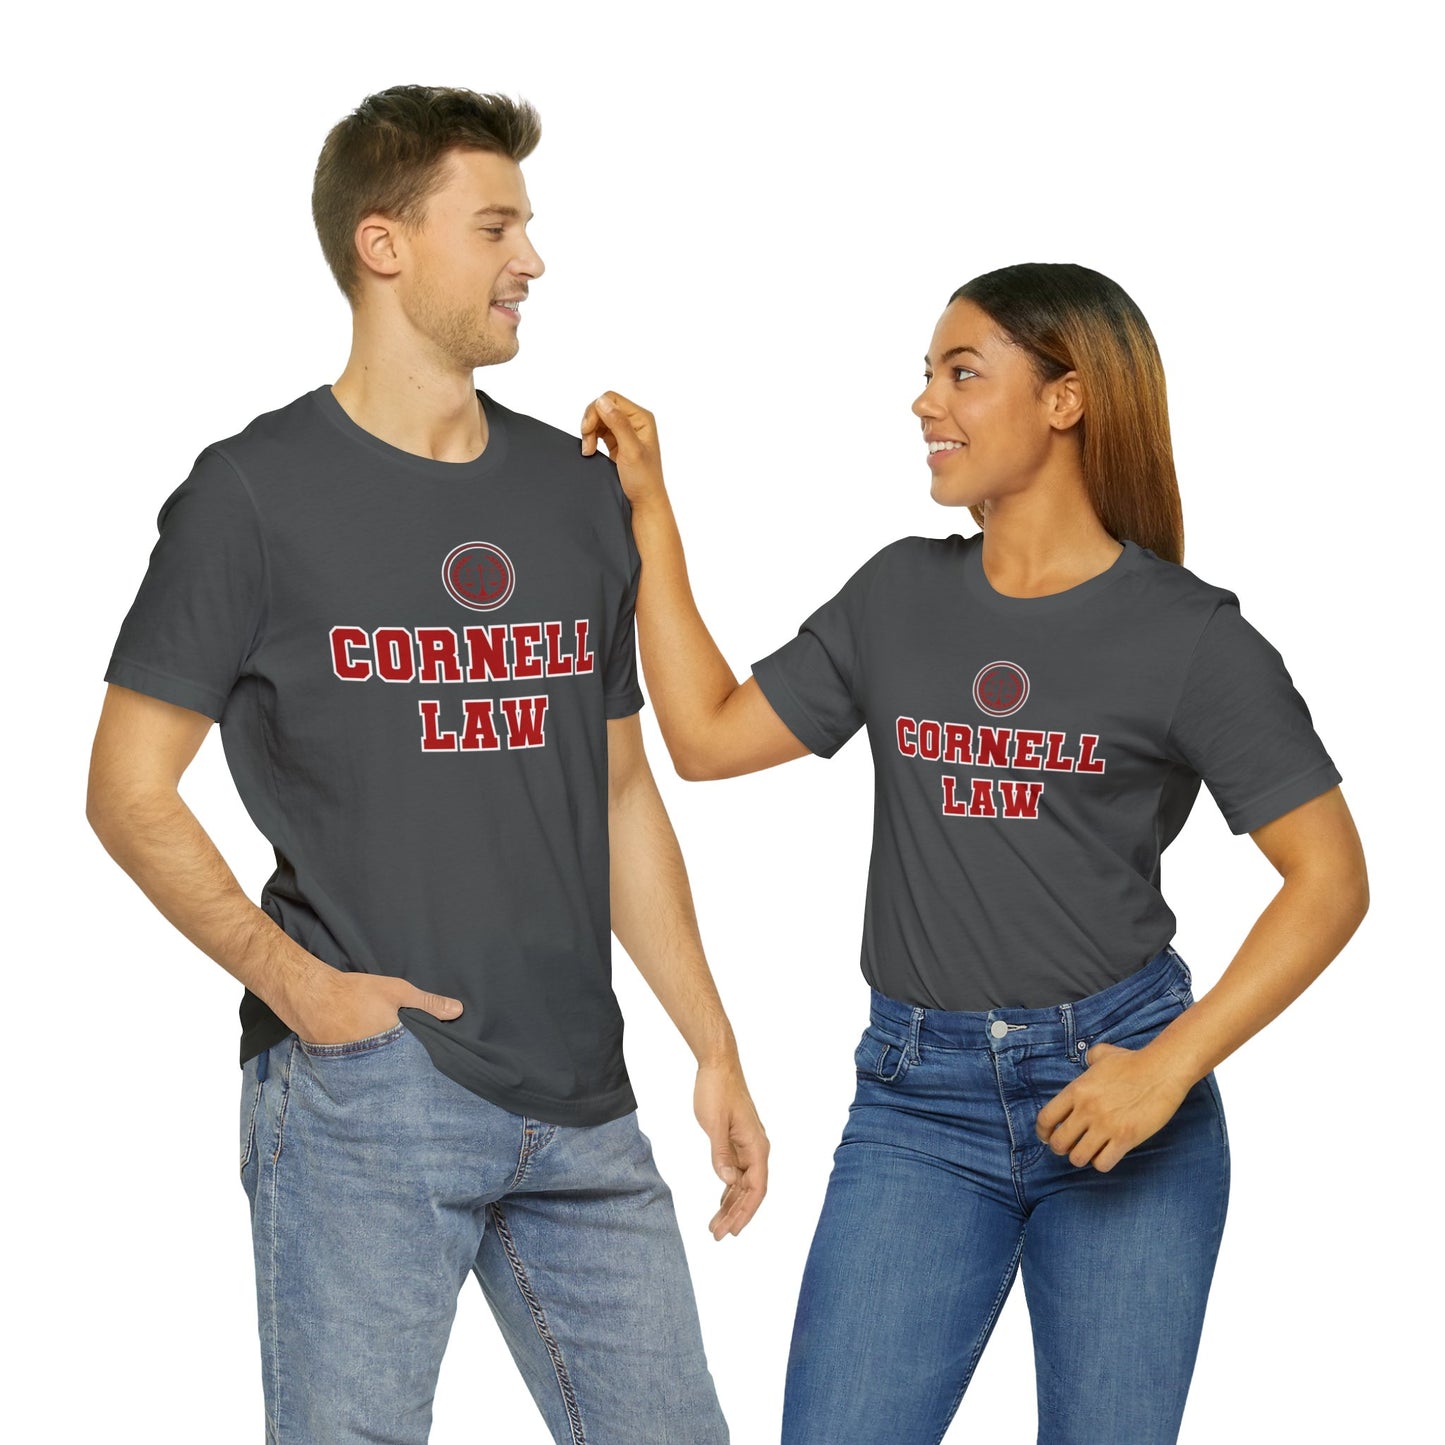 Cornell University Law School- Adult, Regular Fit, Soft Cotton, T-shirt